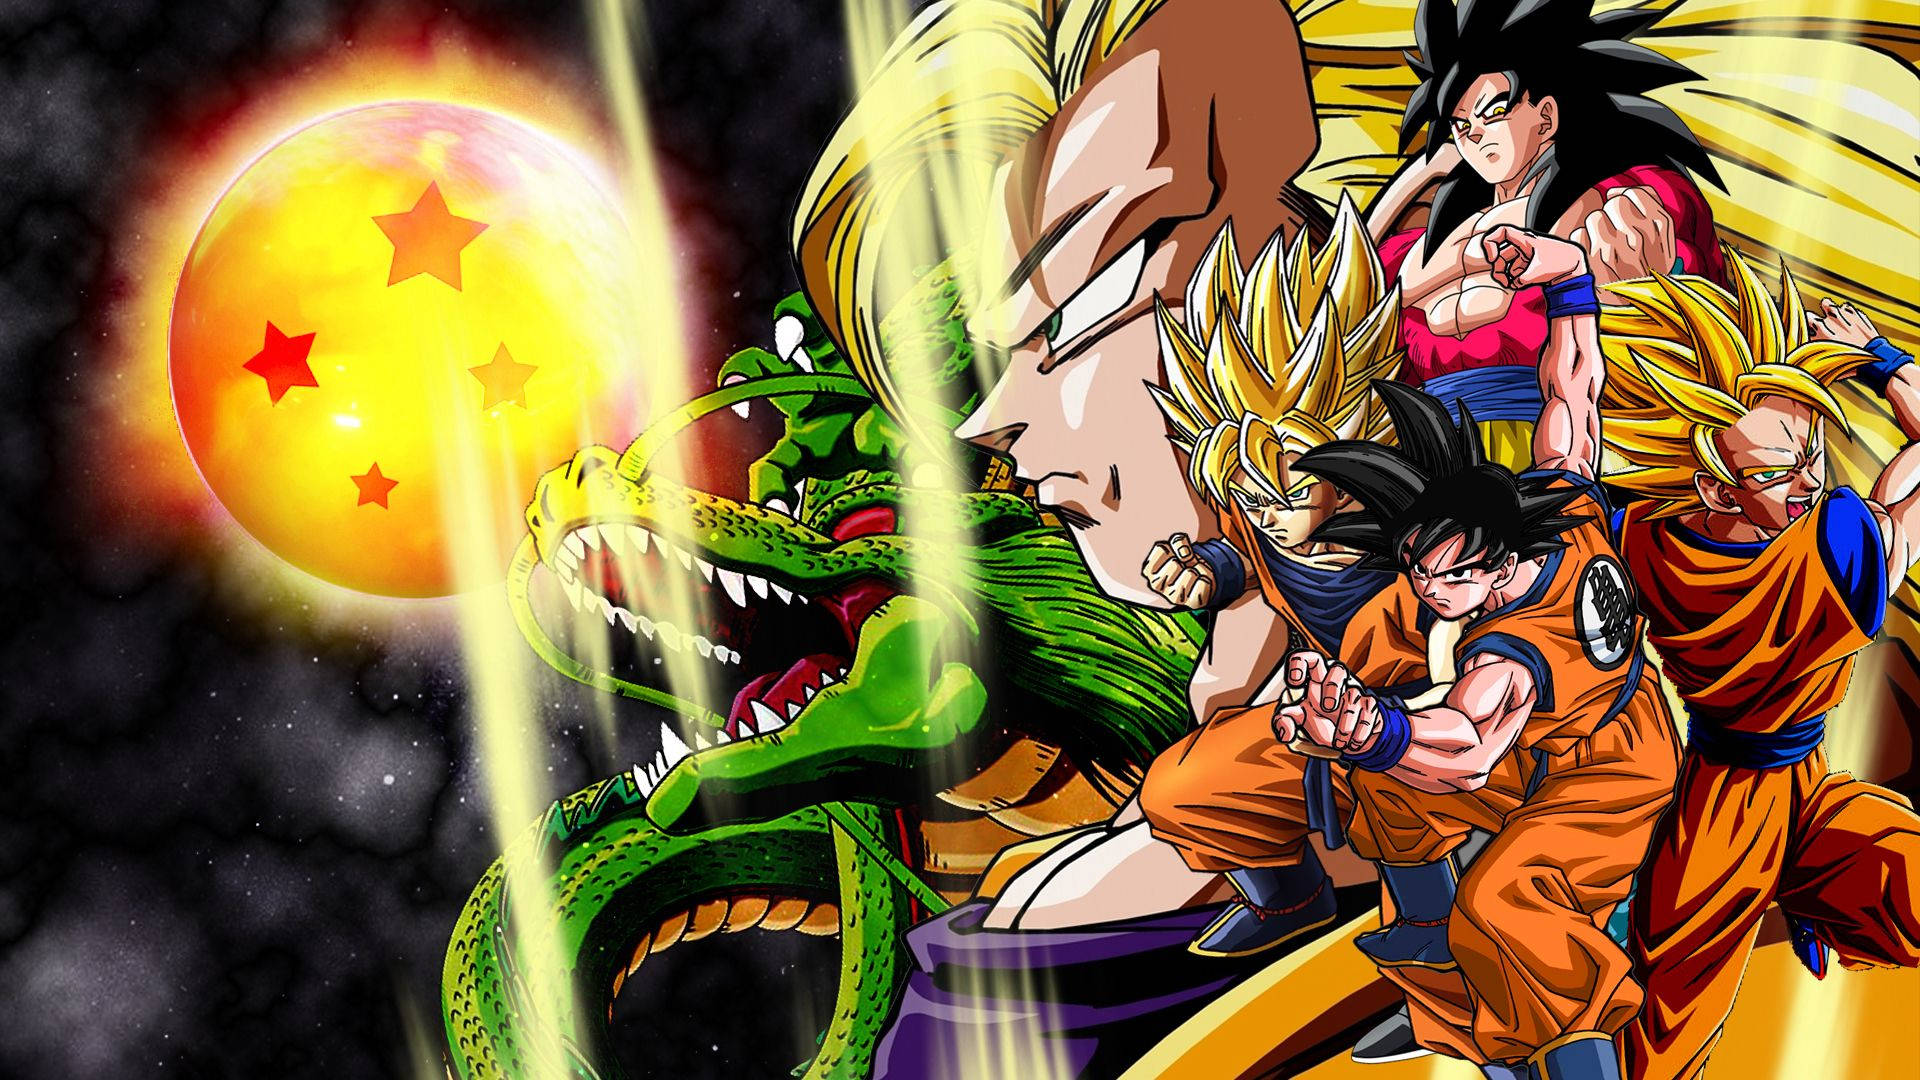 "Unlock The Power of The Four-Star Dragon Ball" Wallpaper